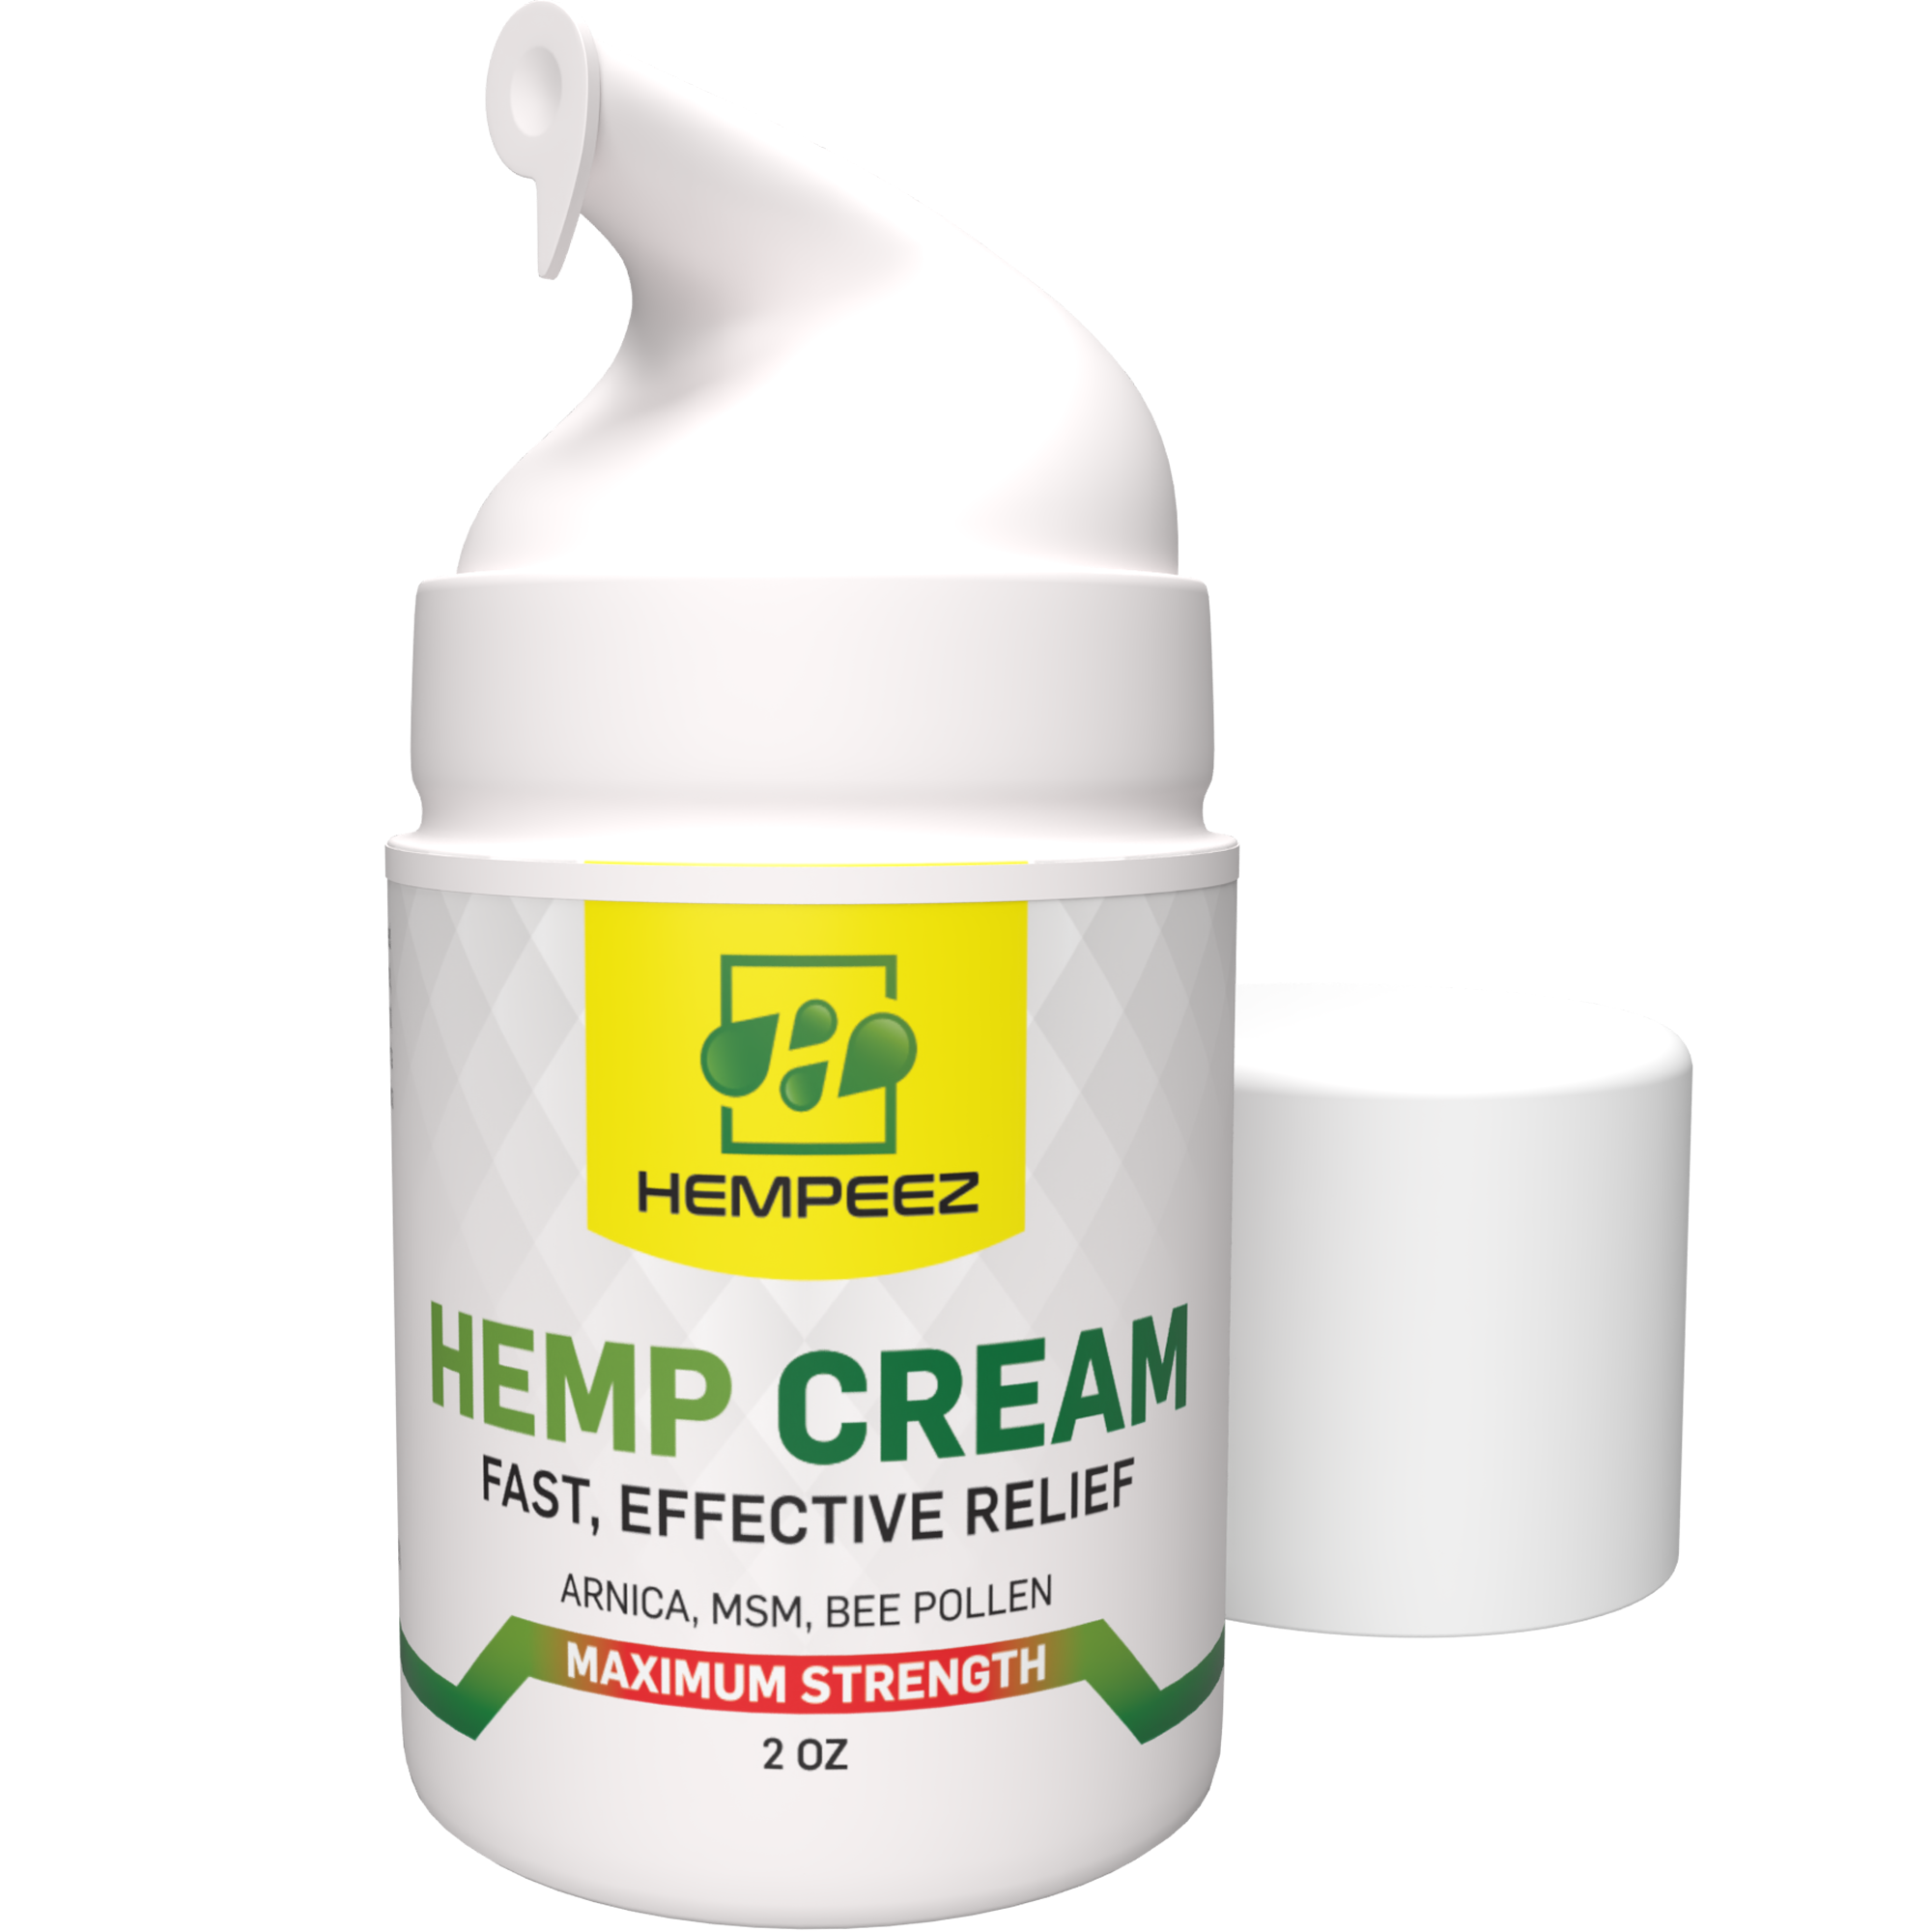 Hemp Pain Relief Cream in Travel Size Bottle